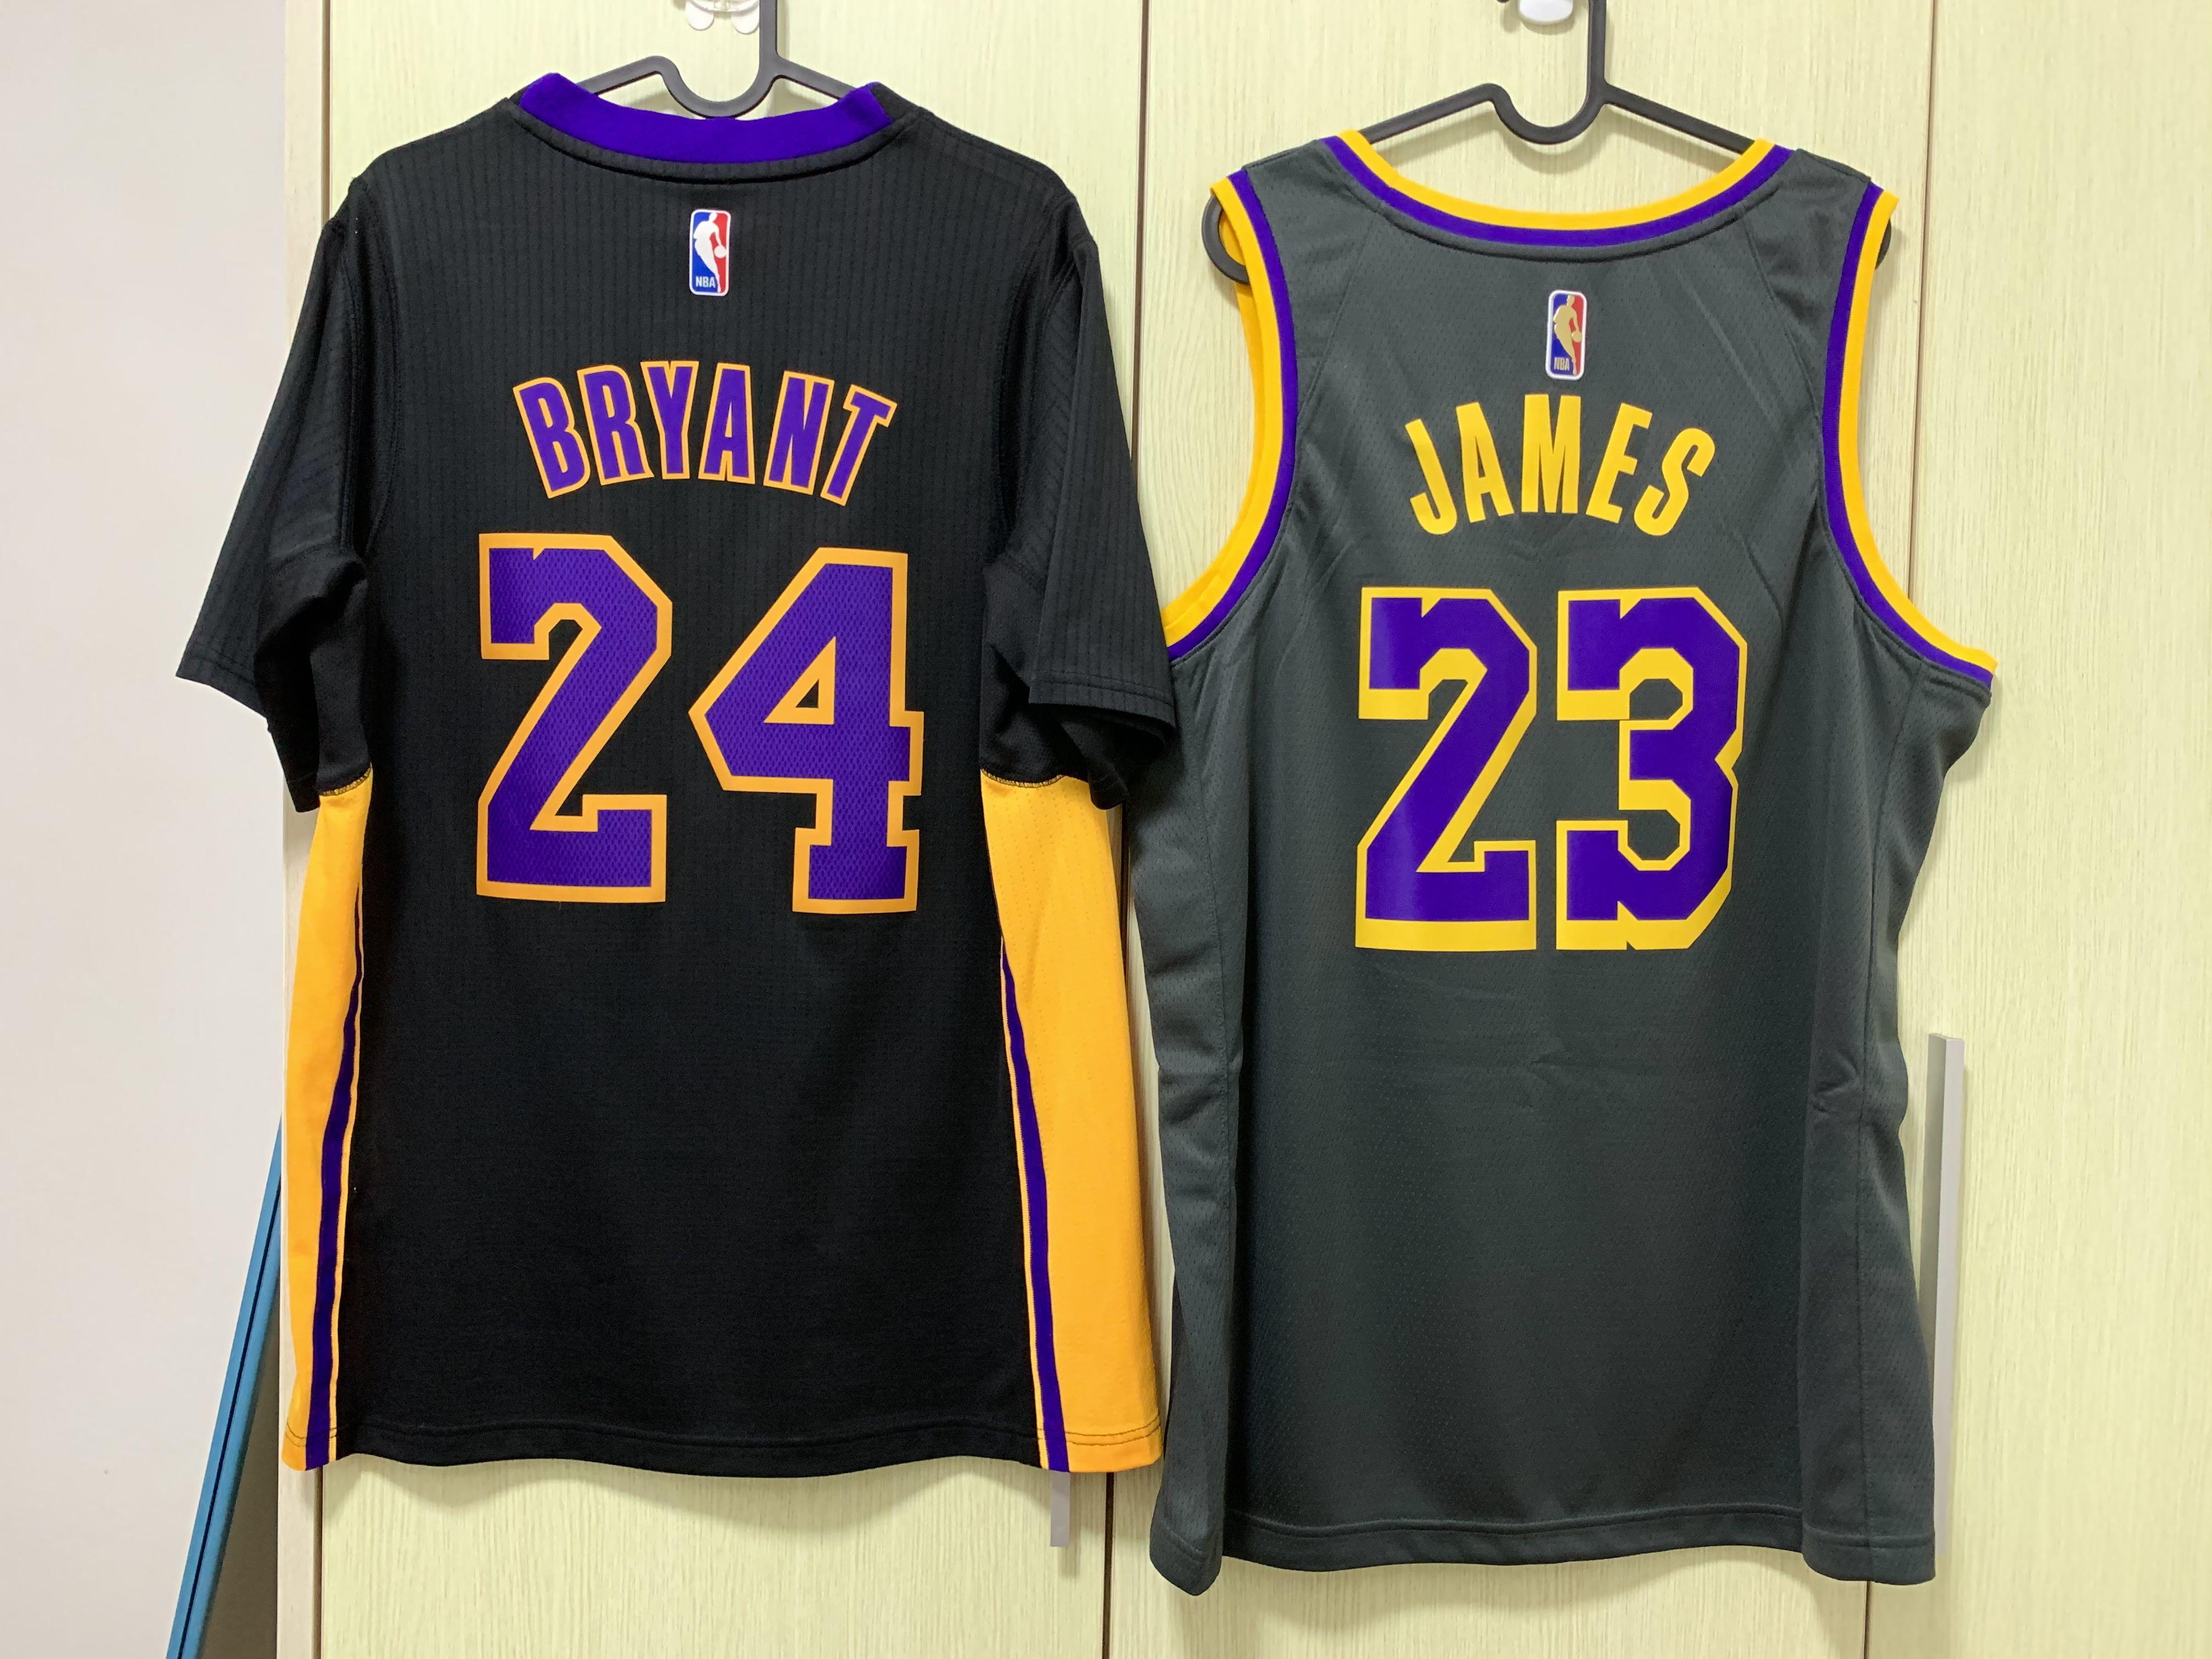 Authentic Lakers Hollywood Night Kobe Bryrant x Lebron James